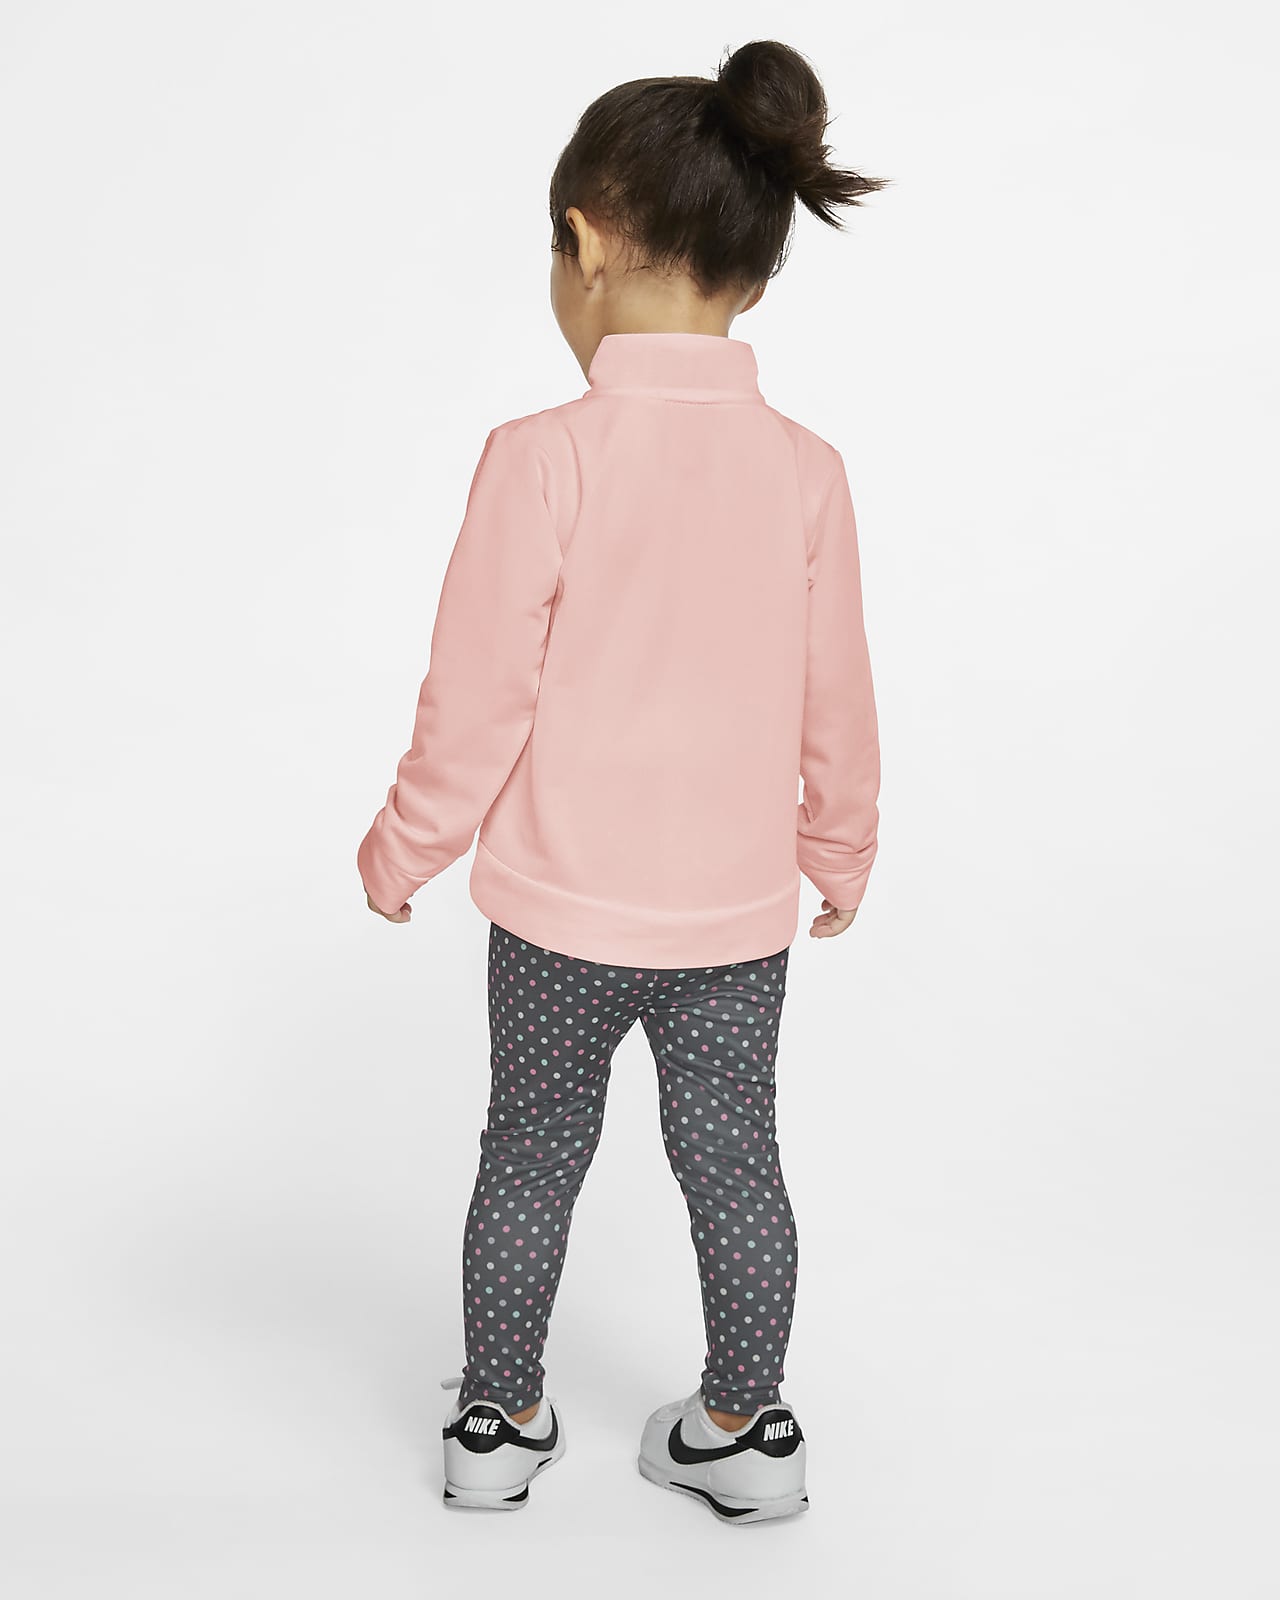 Nike Baby (12-24M) Jacket and Leggings 